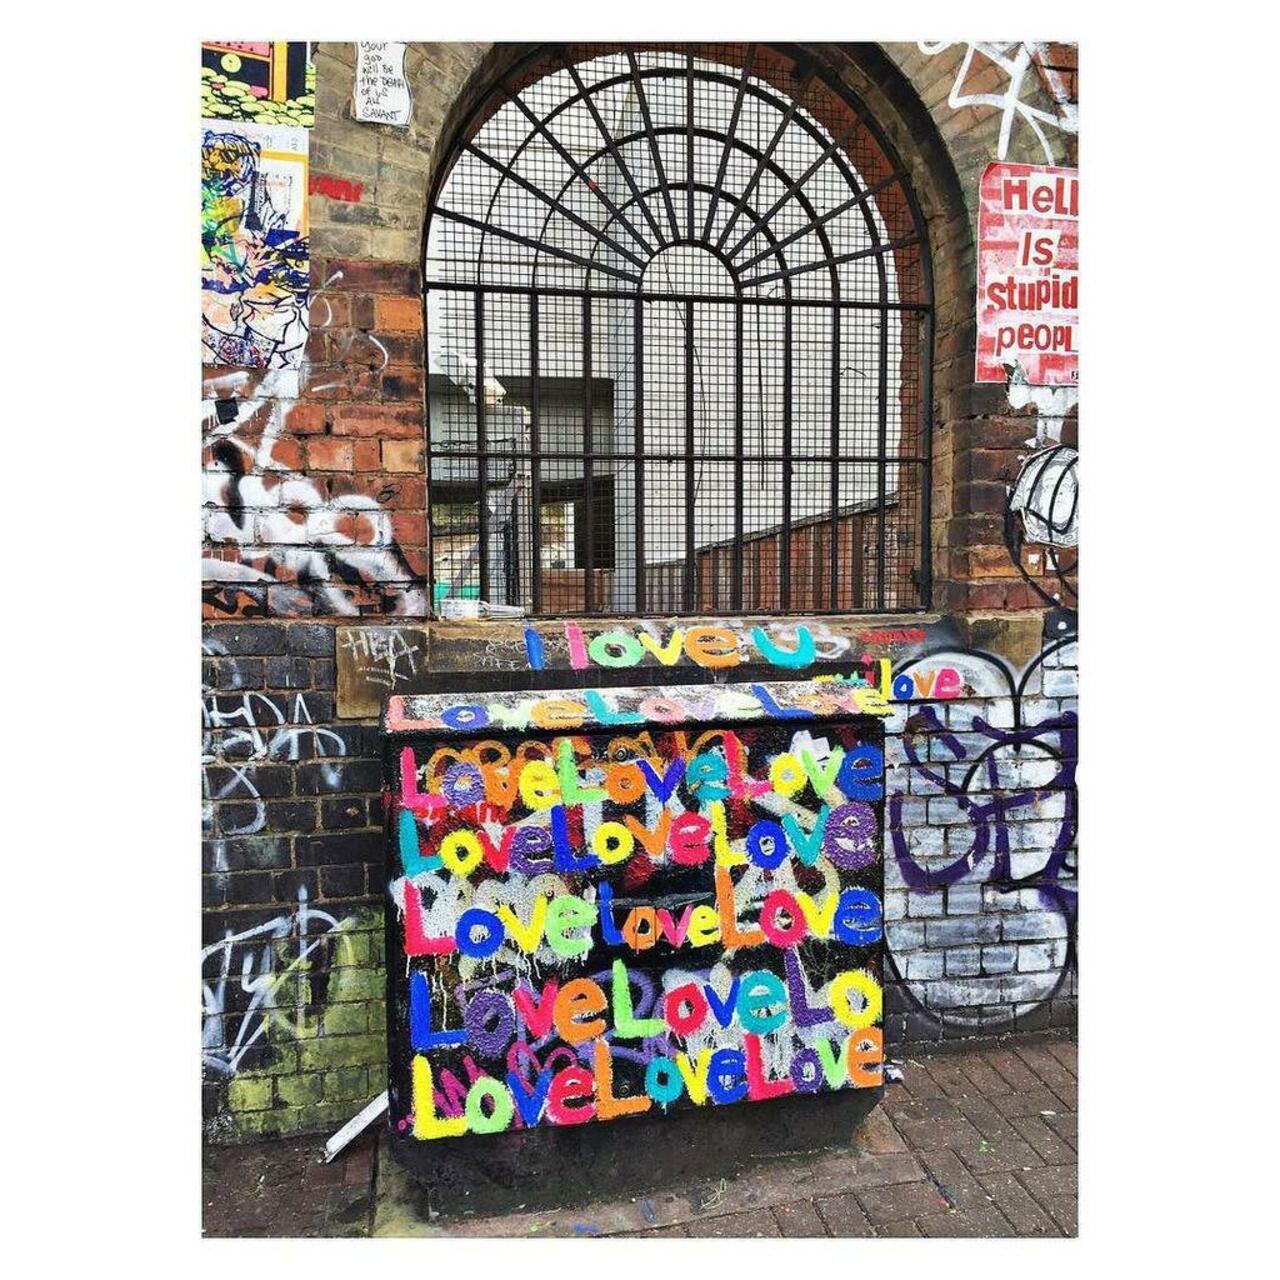 Grey rainy dayz with a splash of neon =  #love #streetart #graffiti #welovestreetart #london #rain #bricklane #eas… http://t.co/vIBkUskIBh